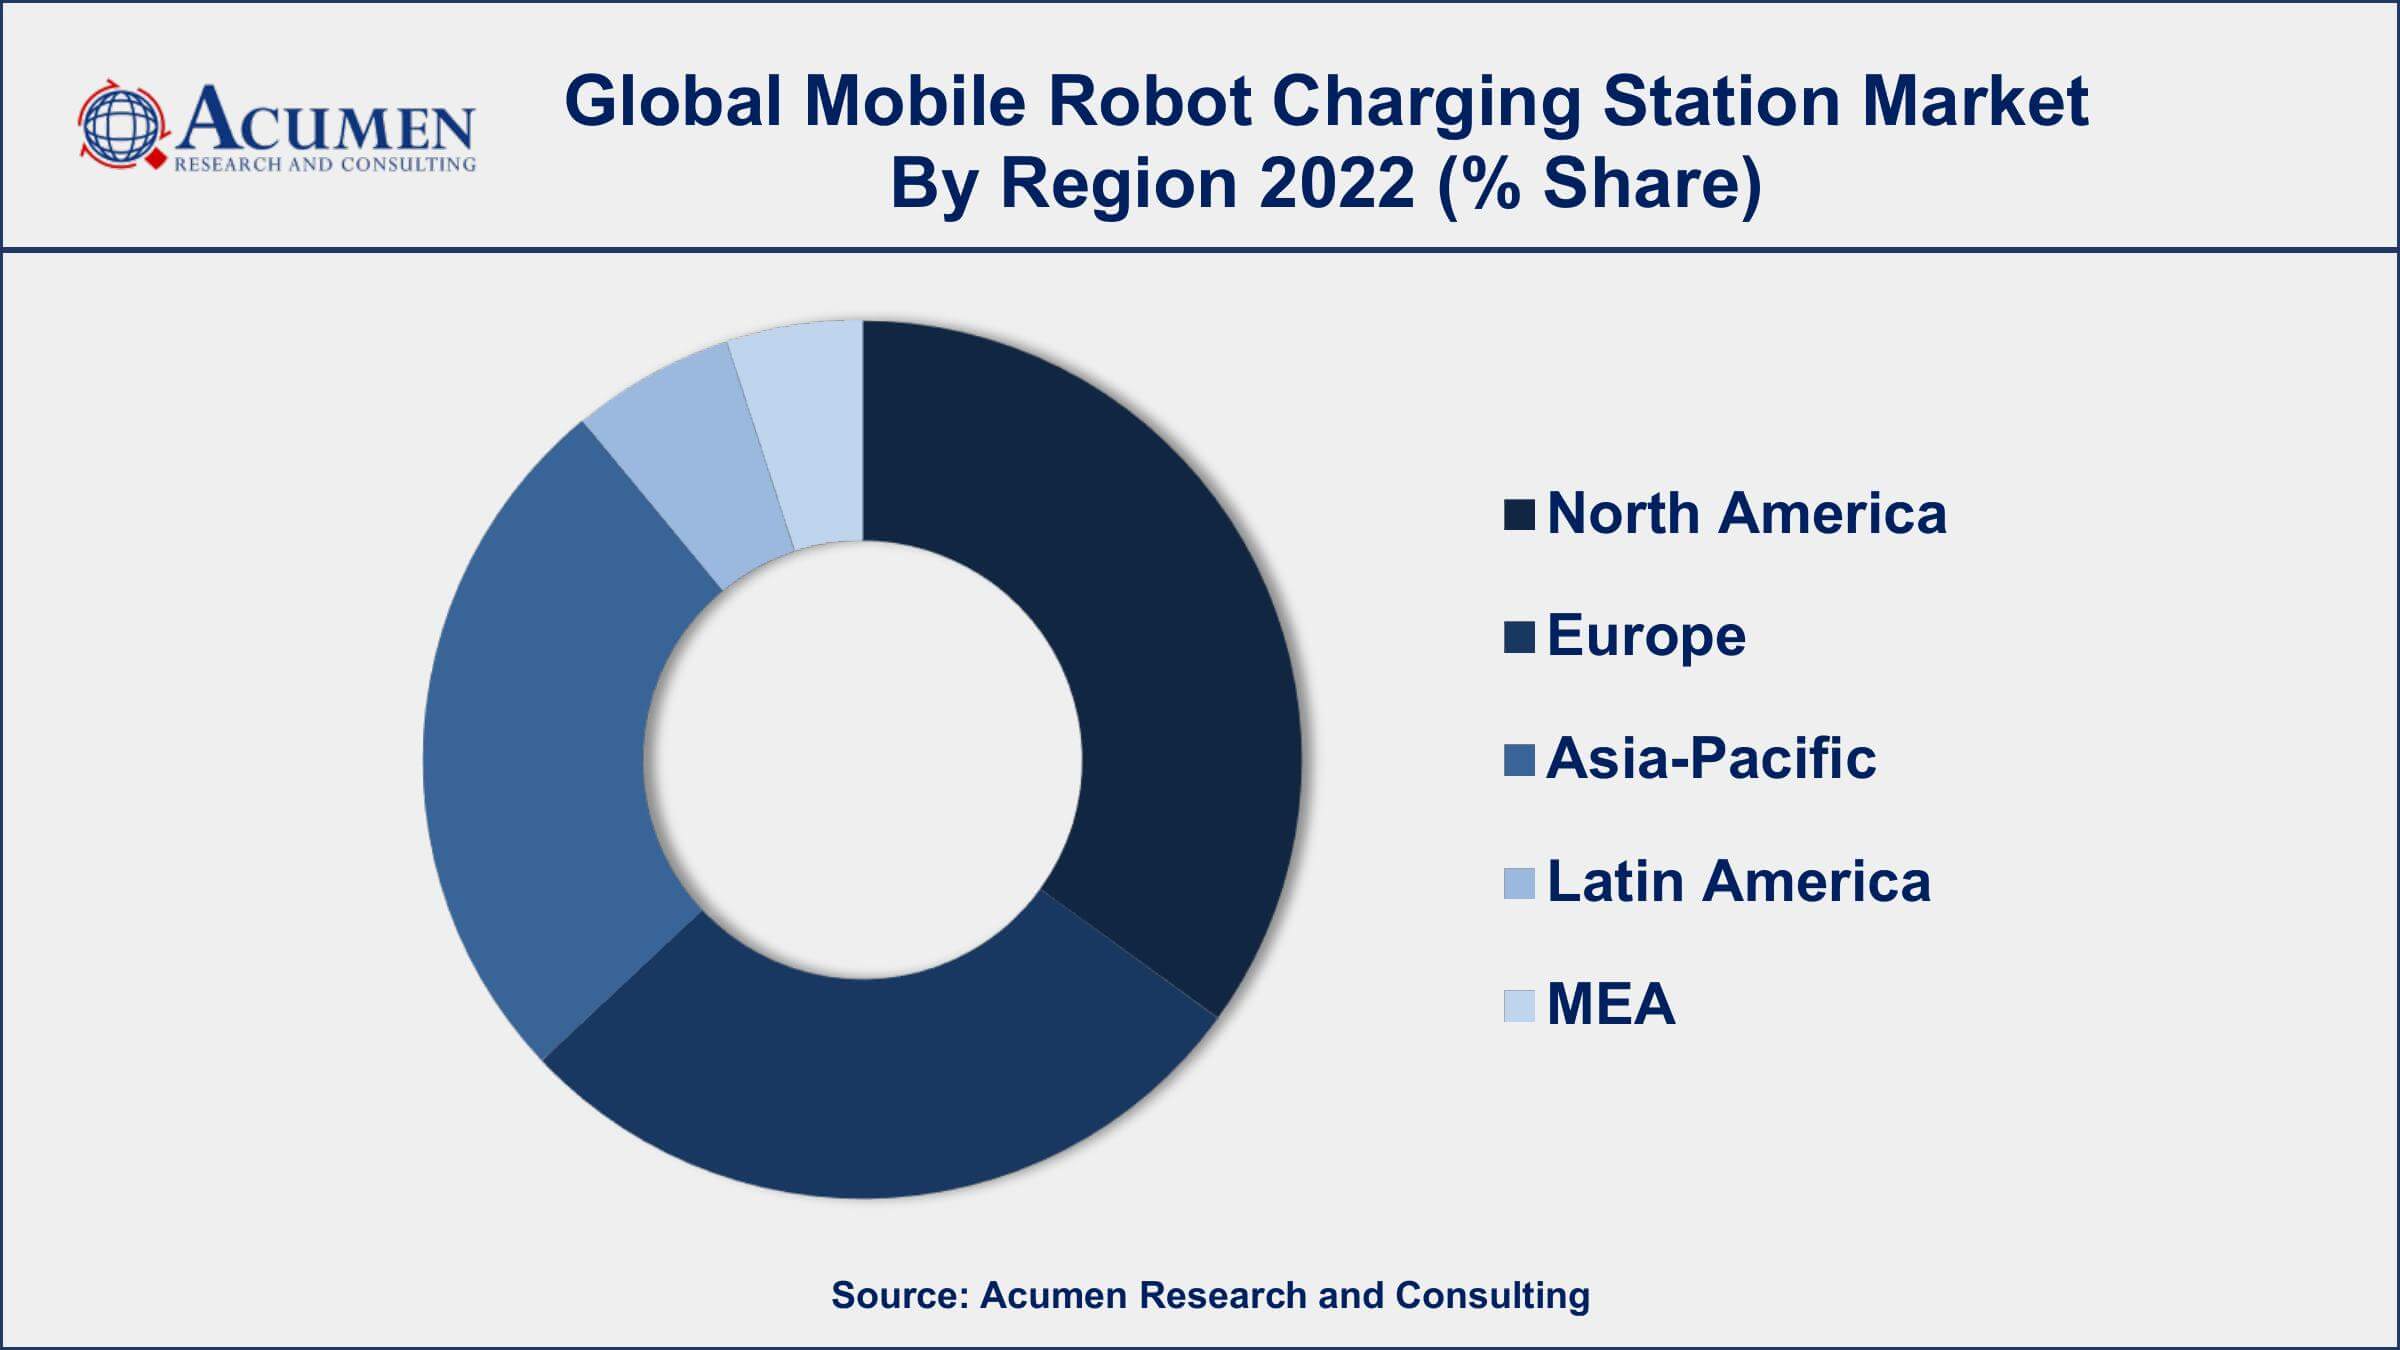 Mobile Robot Charging Station Market Drivers